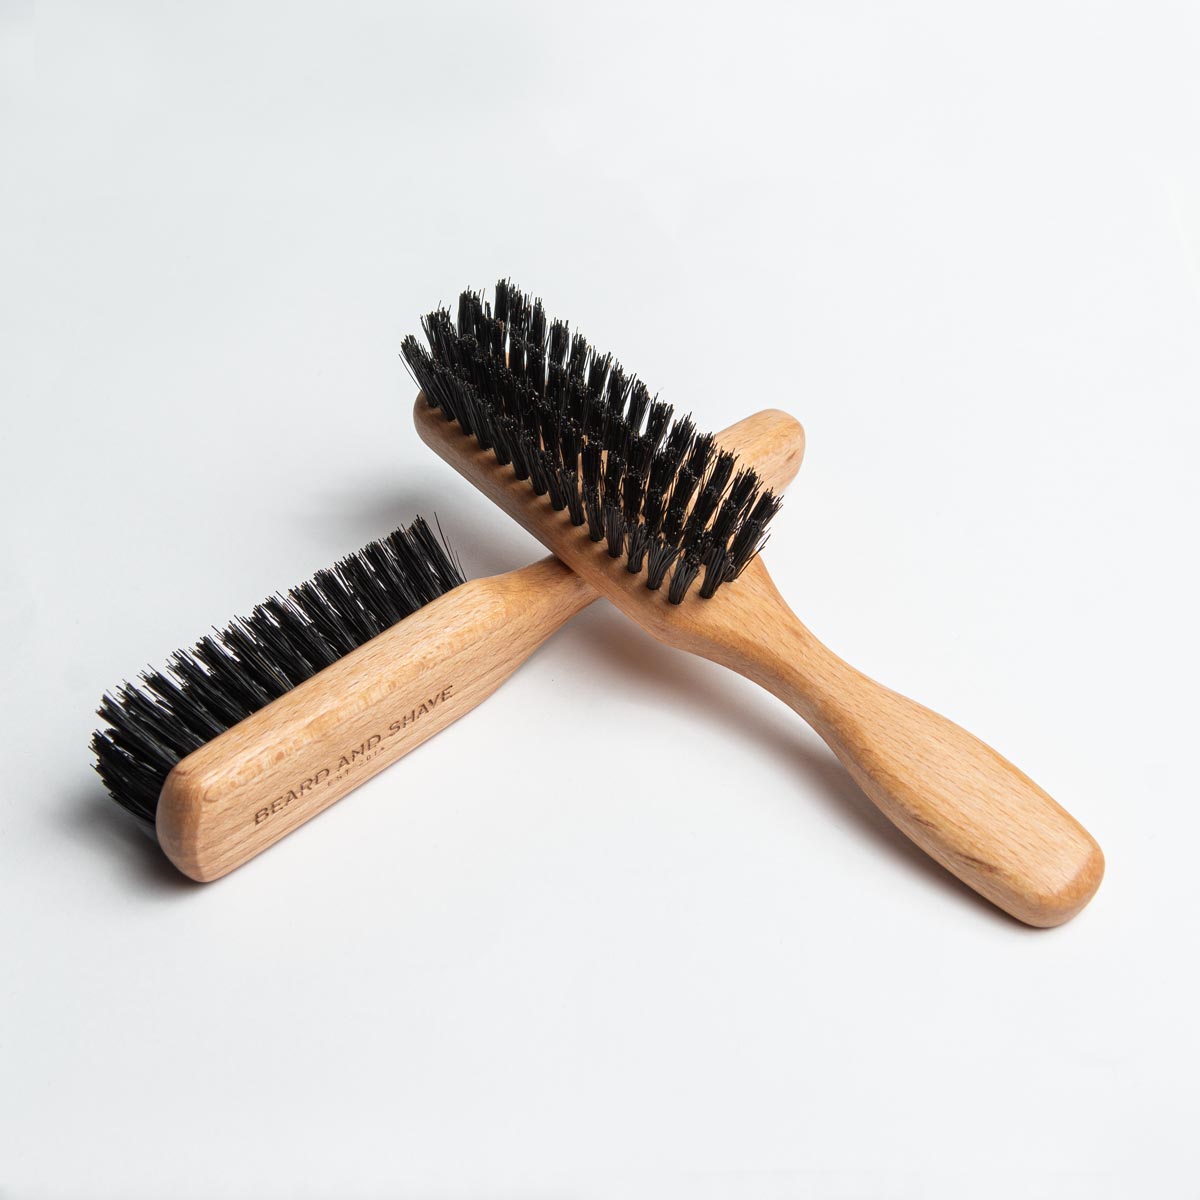 Produktbild Beard and Shave Bartbürste mit Griff aus Buchenholz Moodbild